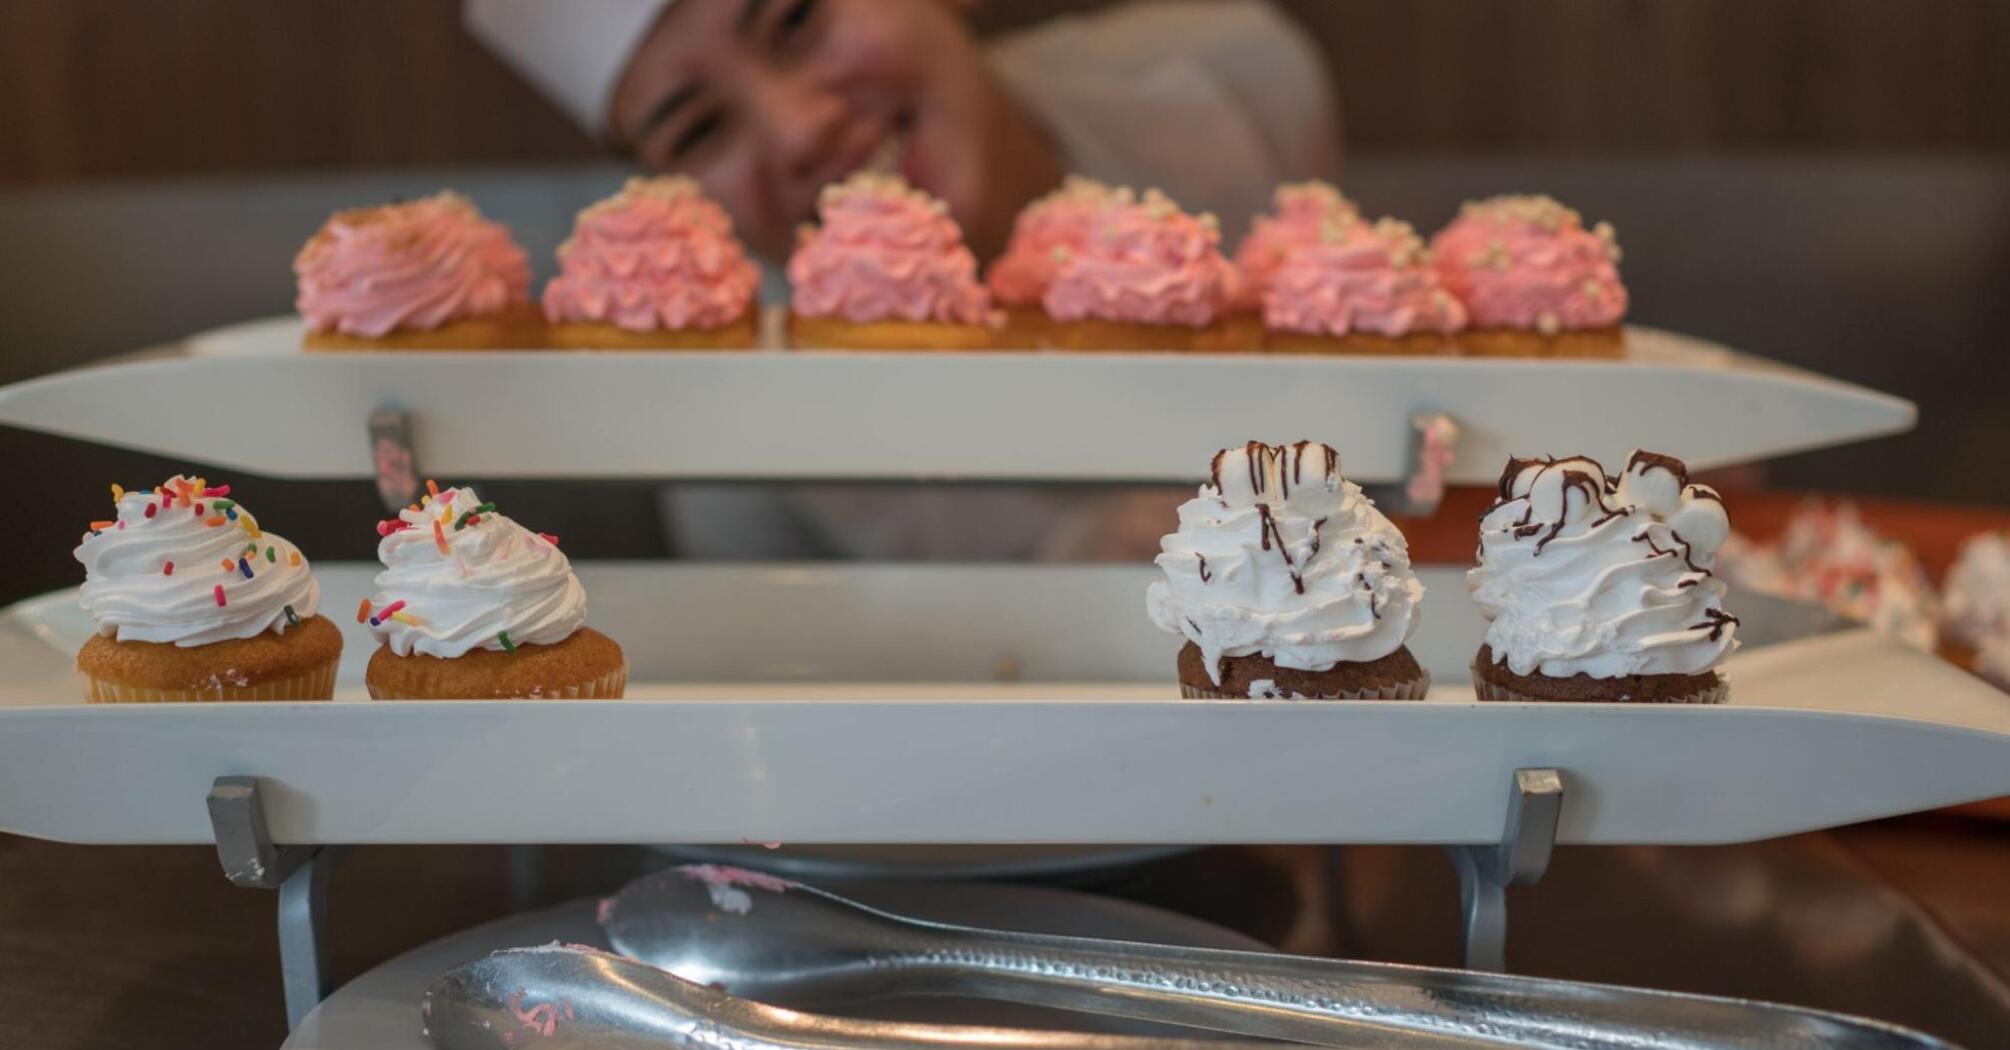 Female chef demonstrates her freshly prepared cupcakes